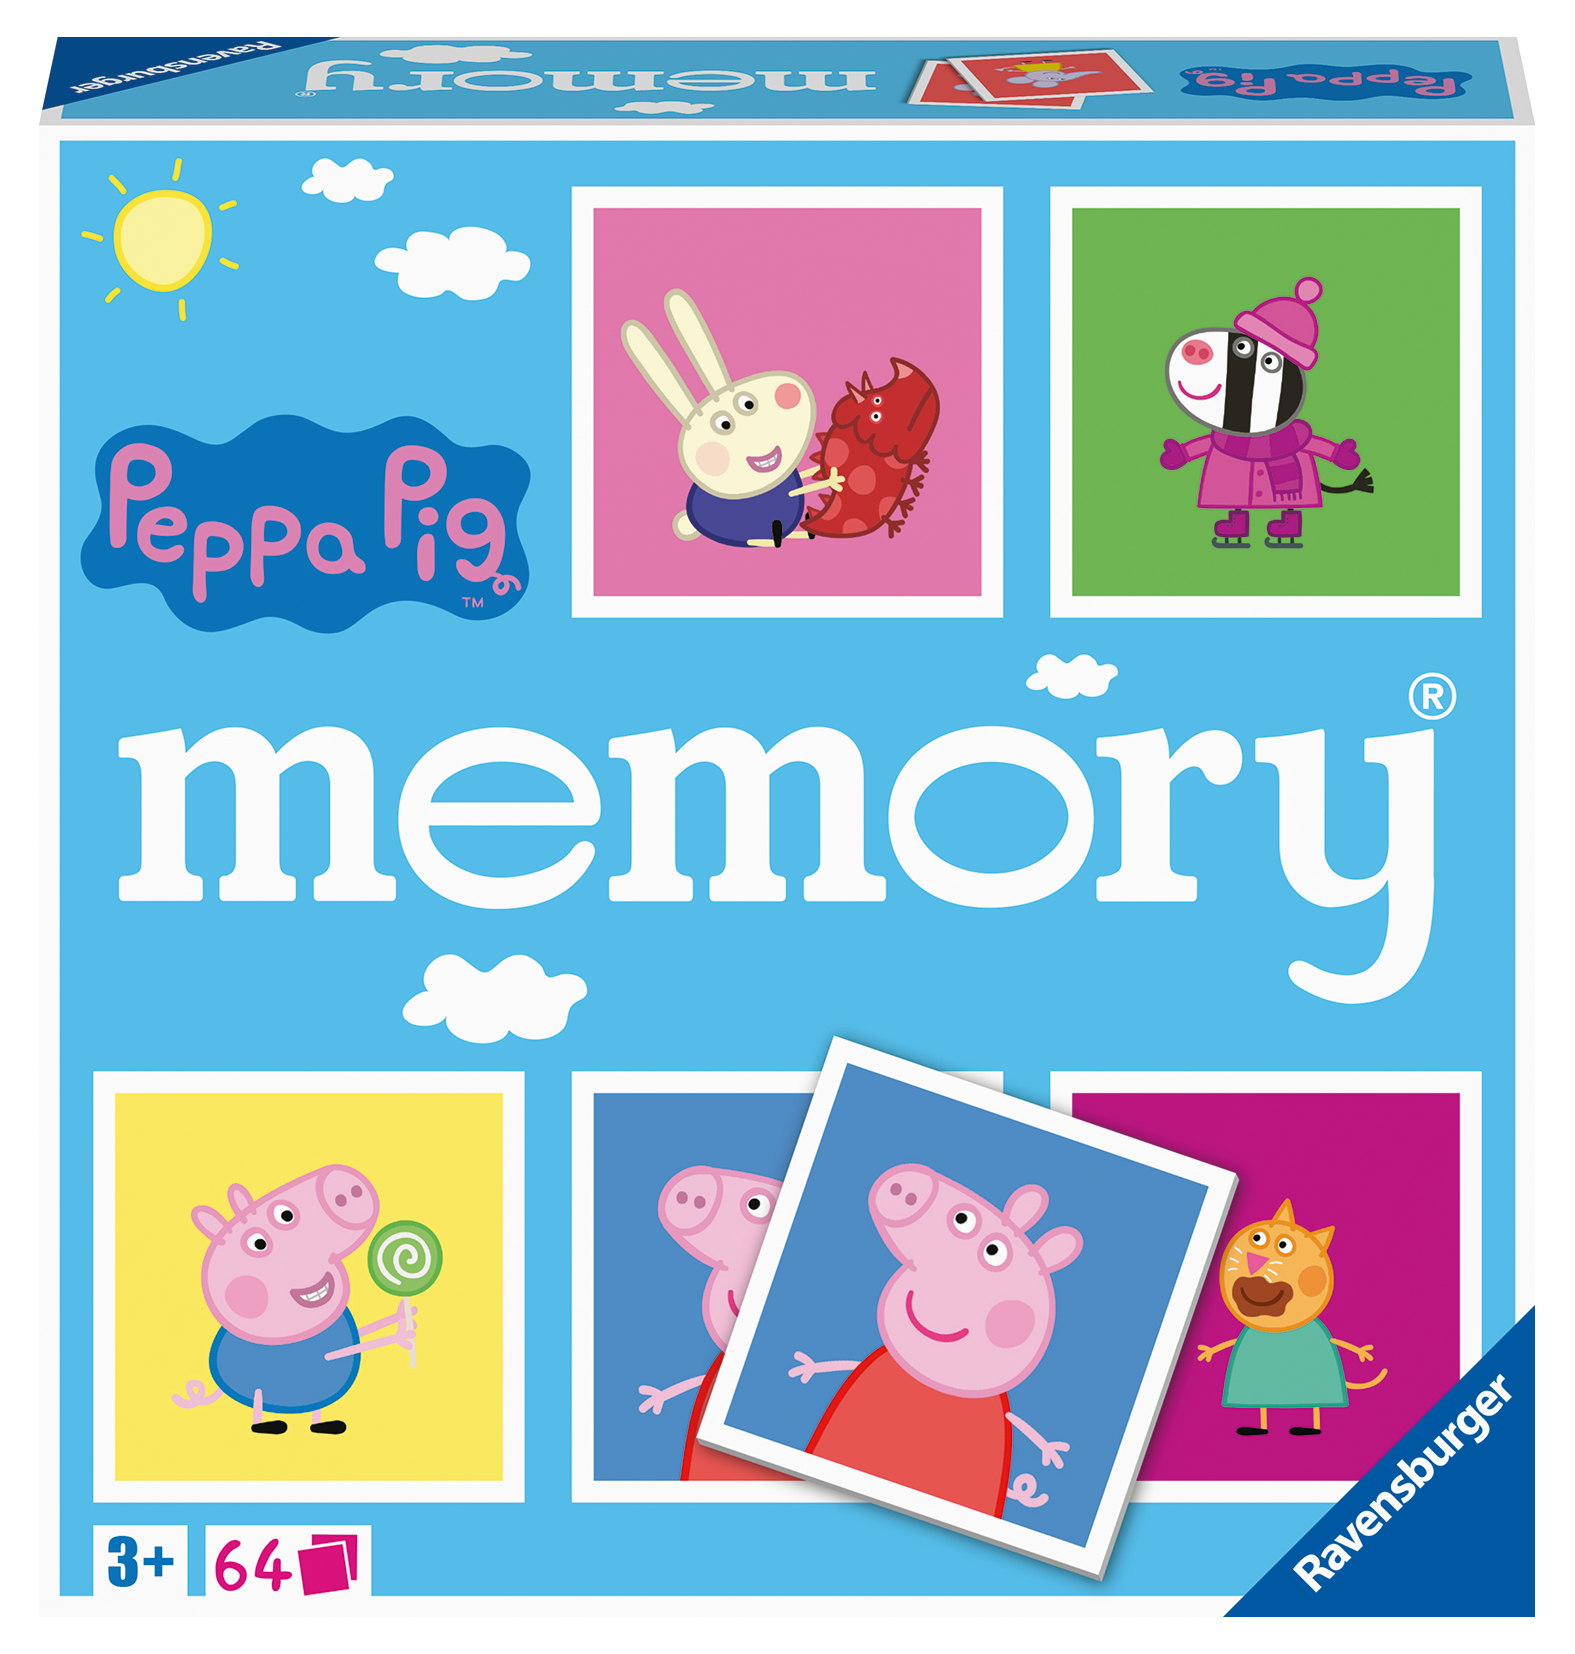 Ravensburger - memory® versione peppa pig, 64 tessere, gioco da tavolo, 3+ anni - PEPPA PIG, RAVENSBURGER